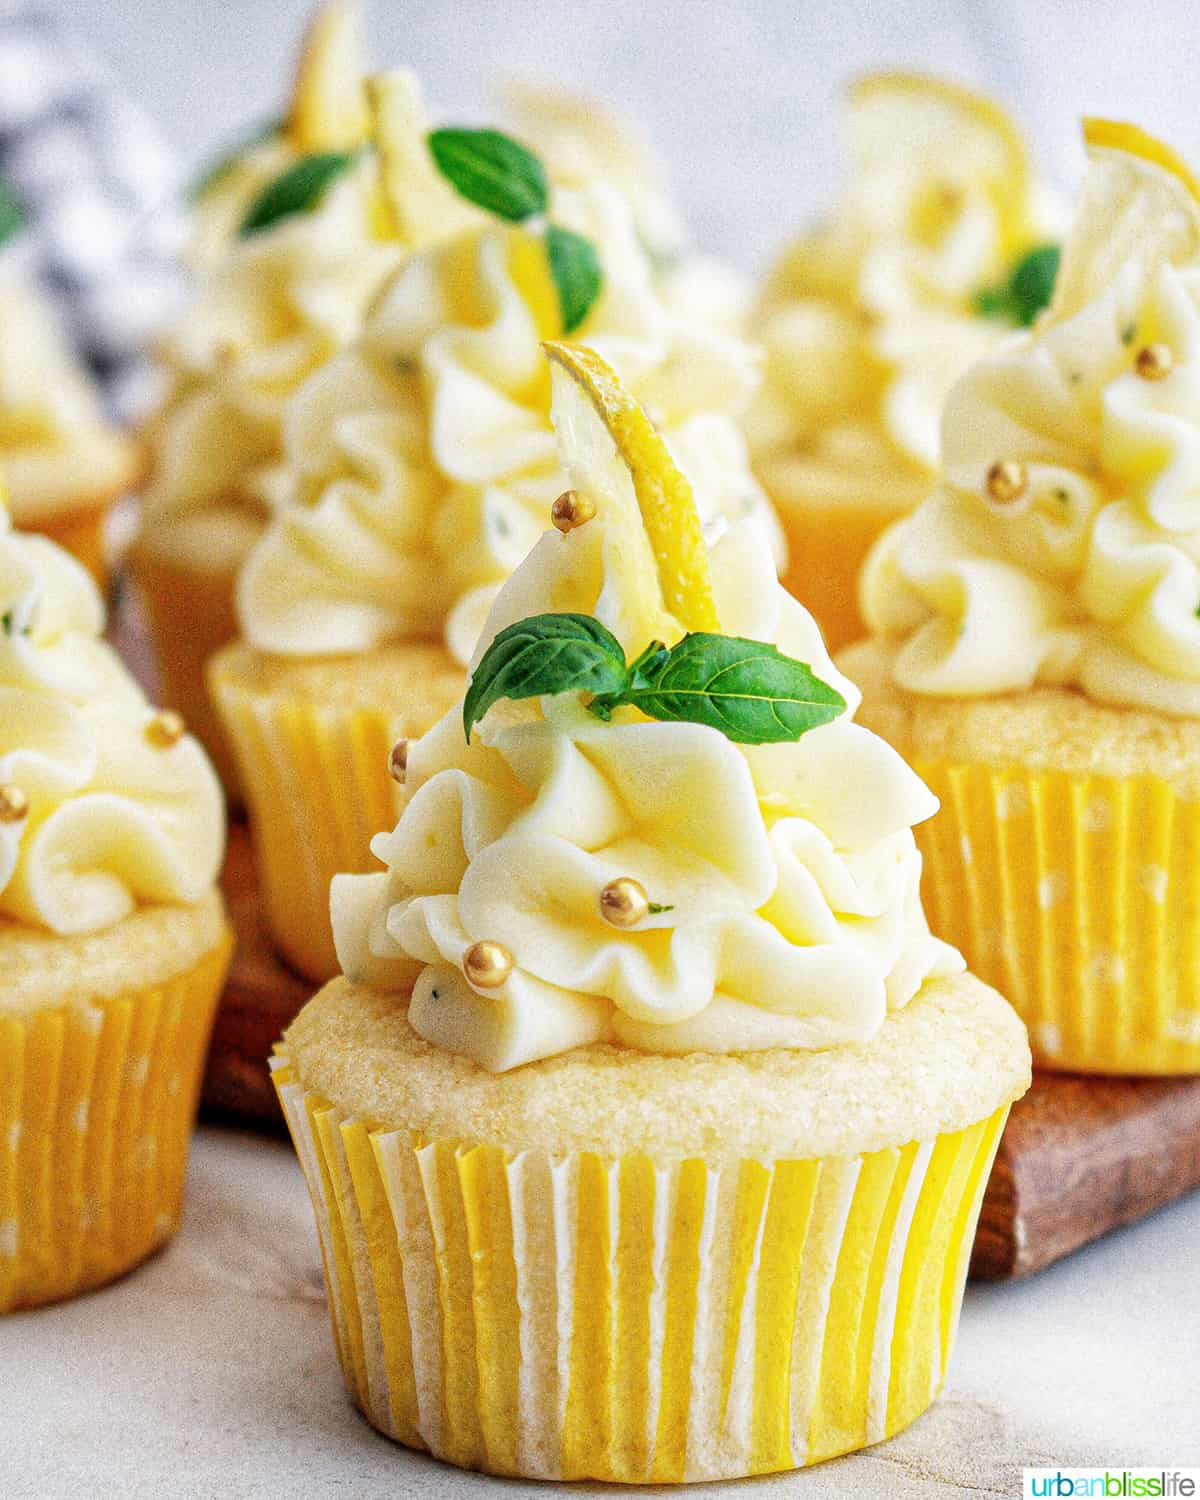 group of lemon basil cupcakes with basil leaf garnishes.